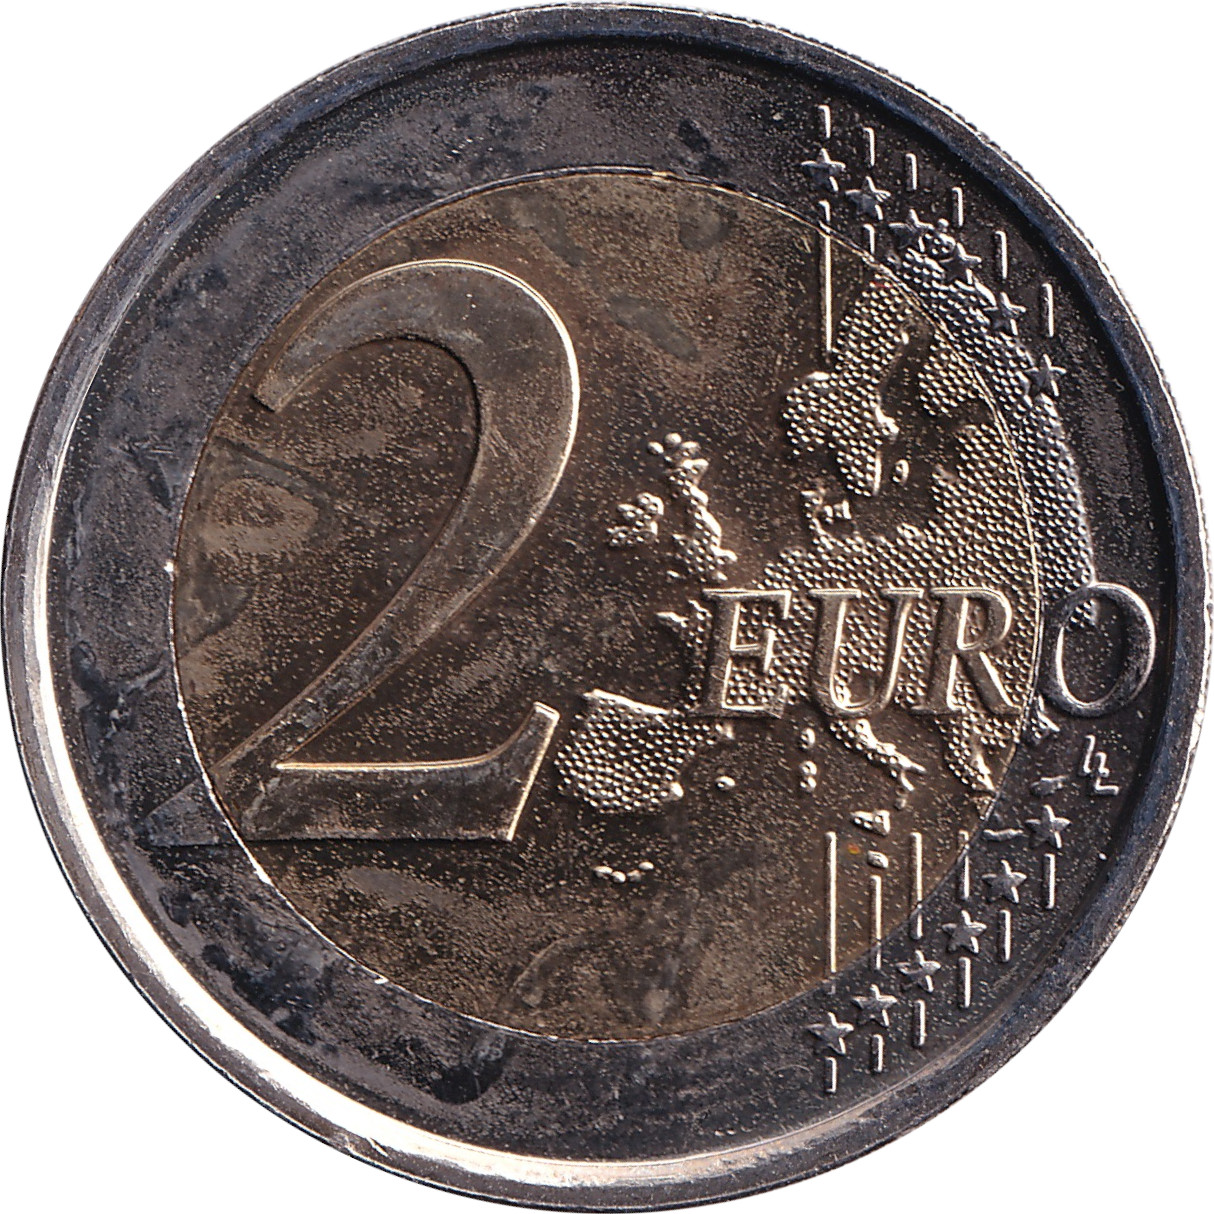 2 euro - Premiere guerre mondiale - 100 years